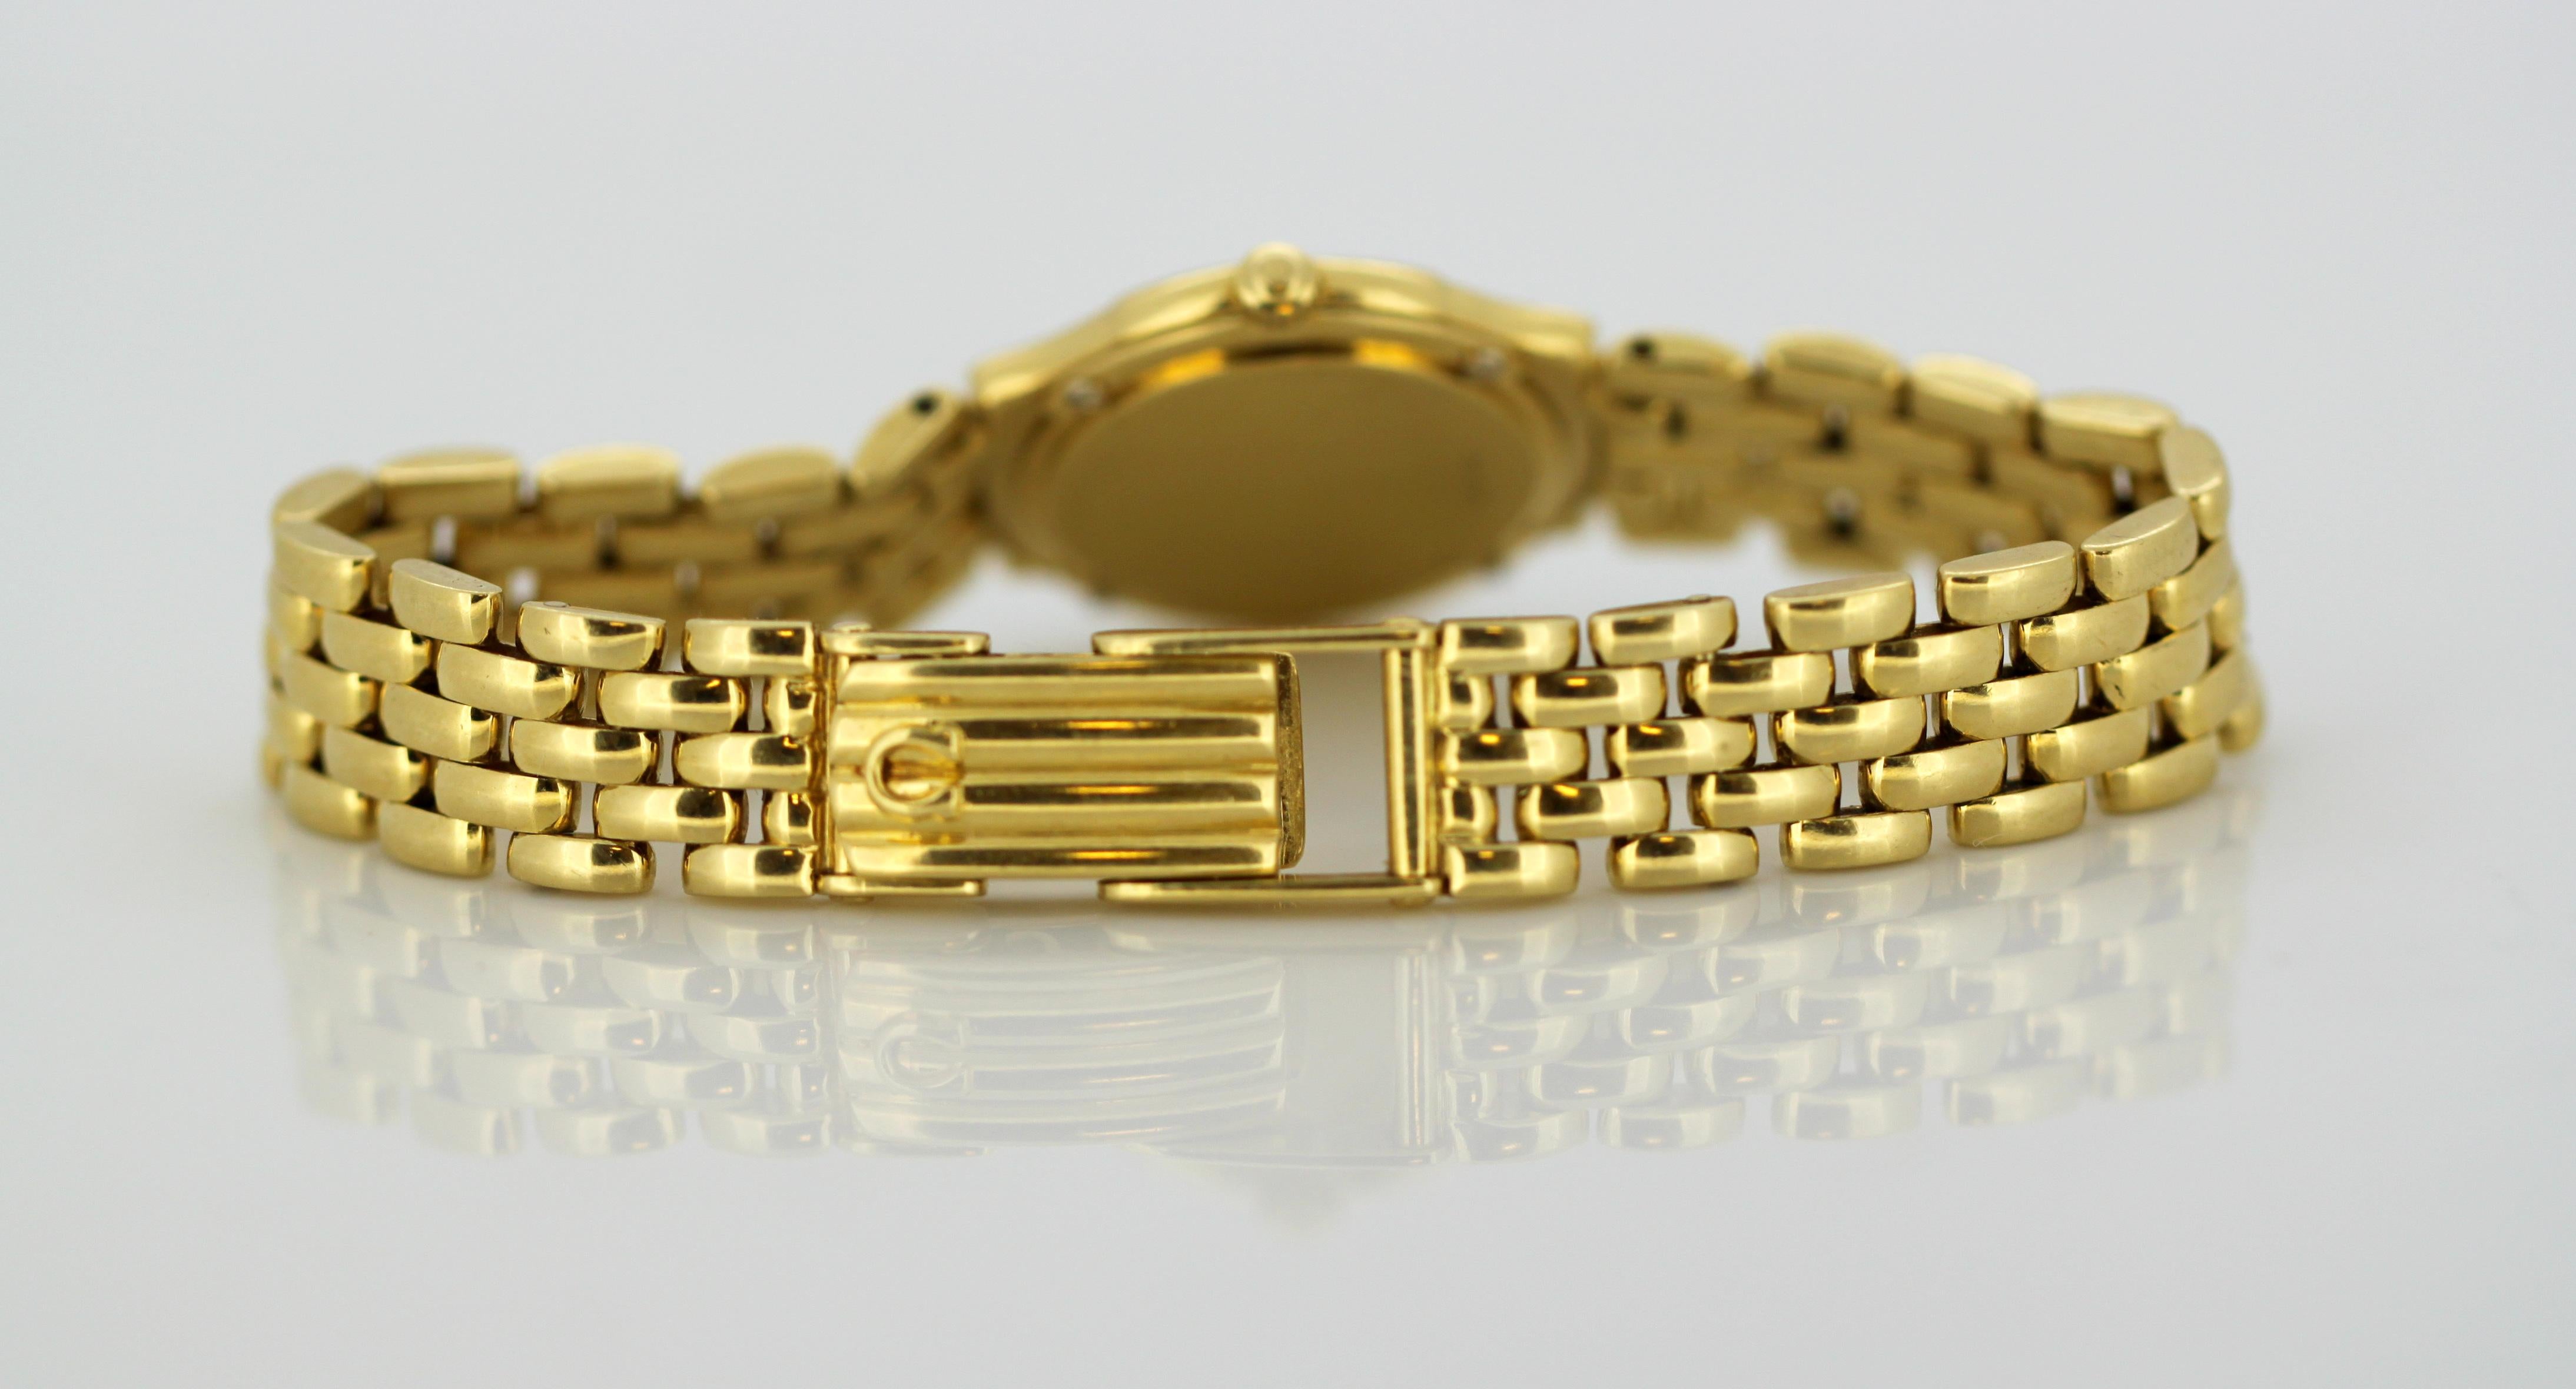 Ladies Omega wristwatch set in full 18k gold, diamond bezel & hour markers 7